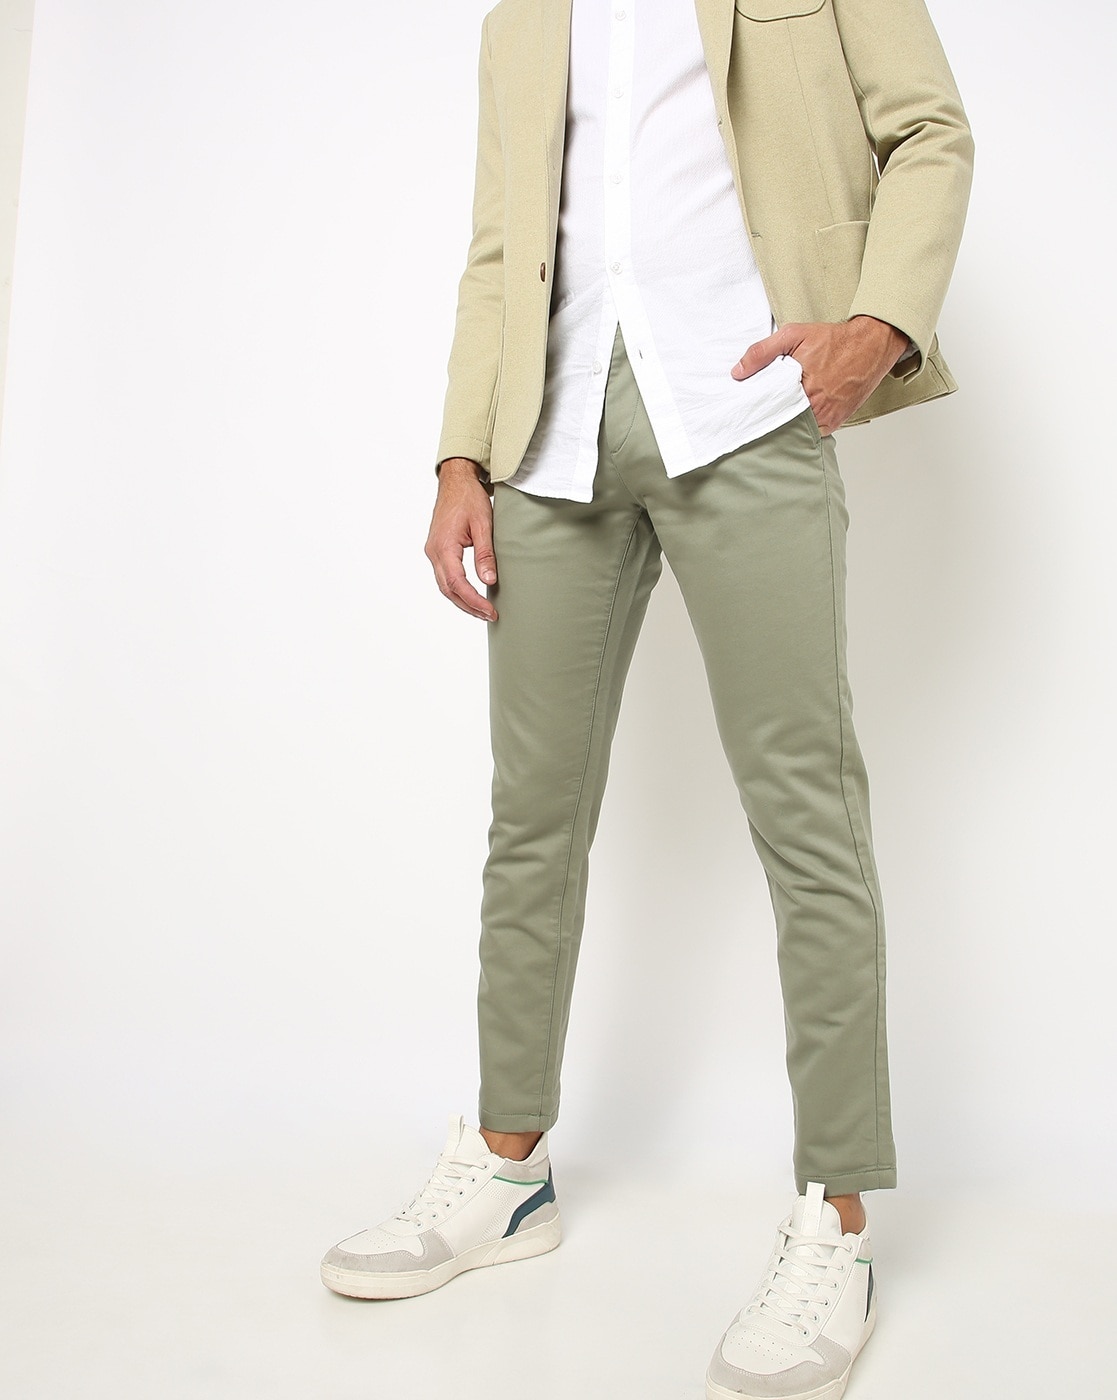 Buy Van Galis Fashion Dark Green Formal Trousers for Men at Amazon.in